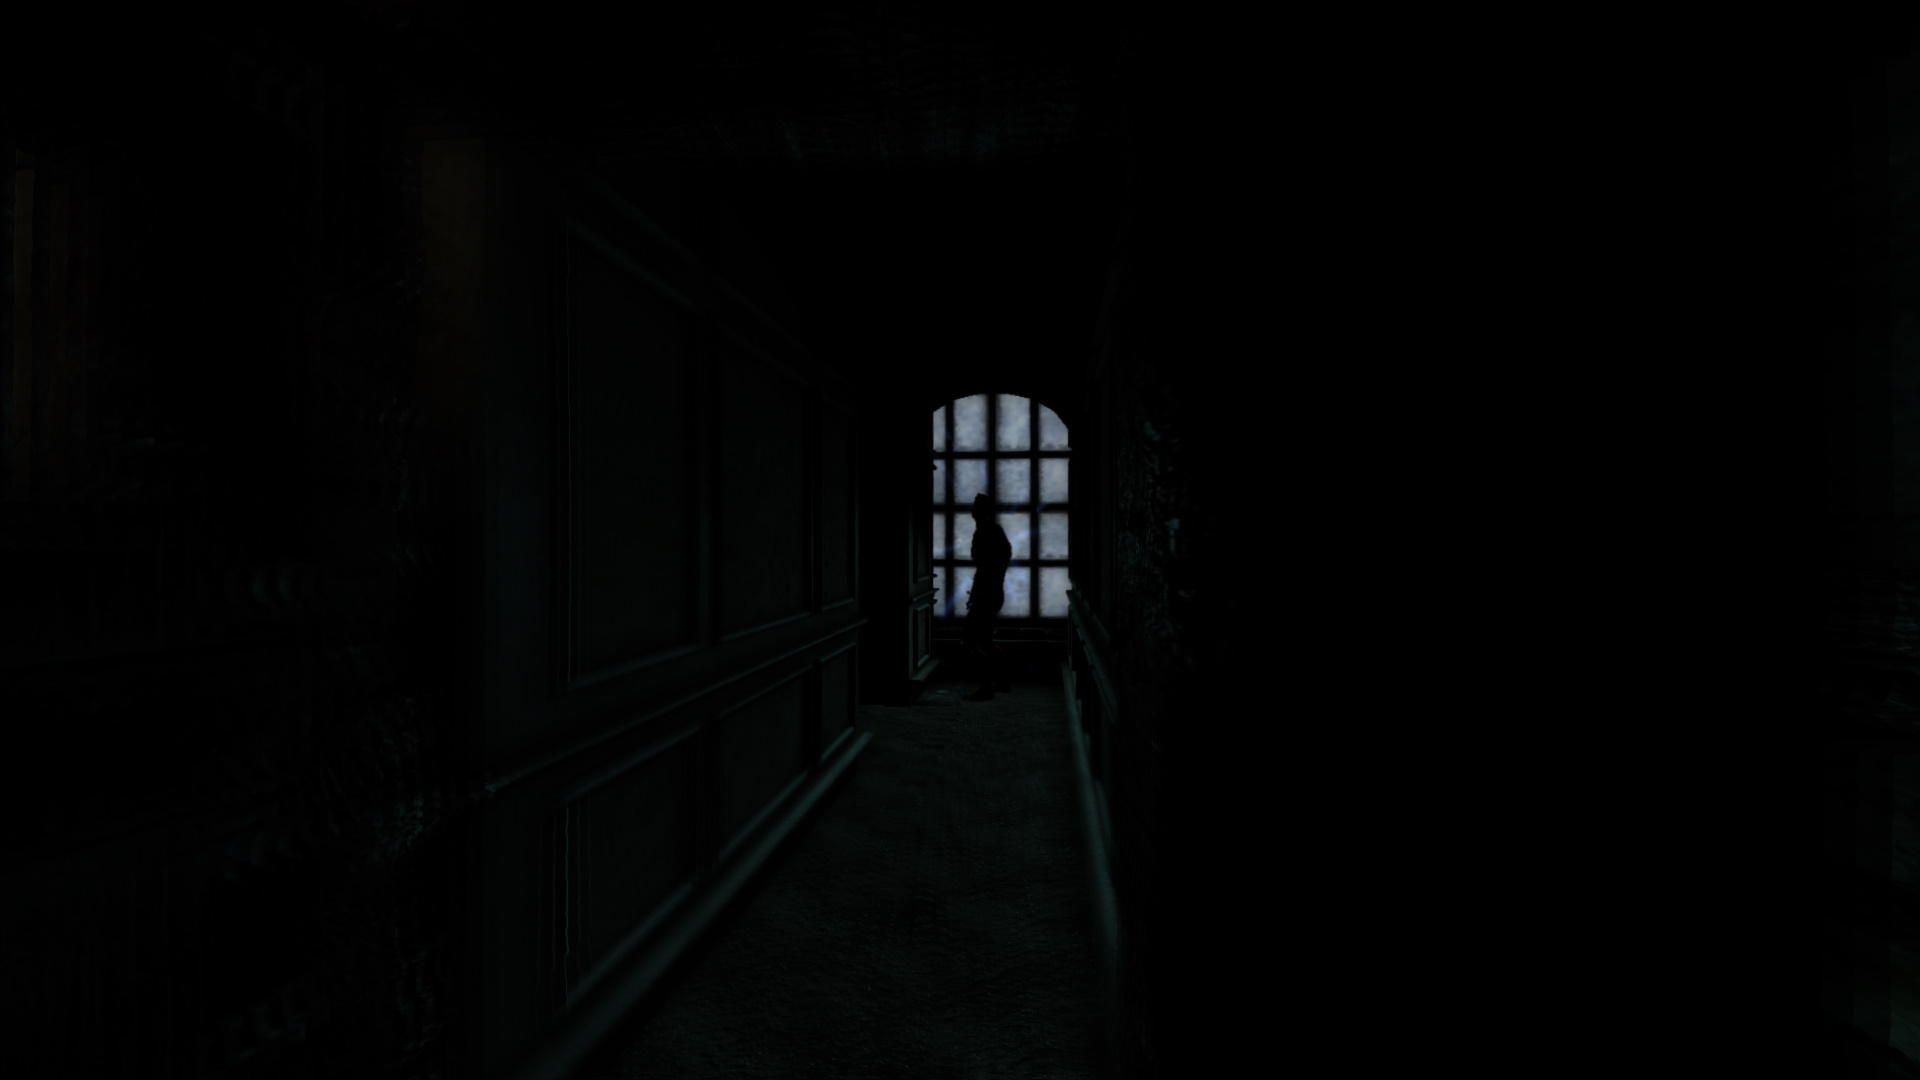 amnesia the dark descent graphics mods